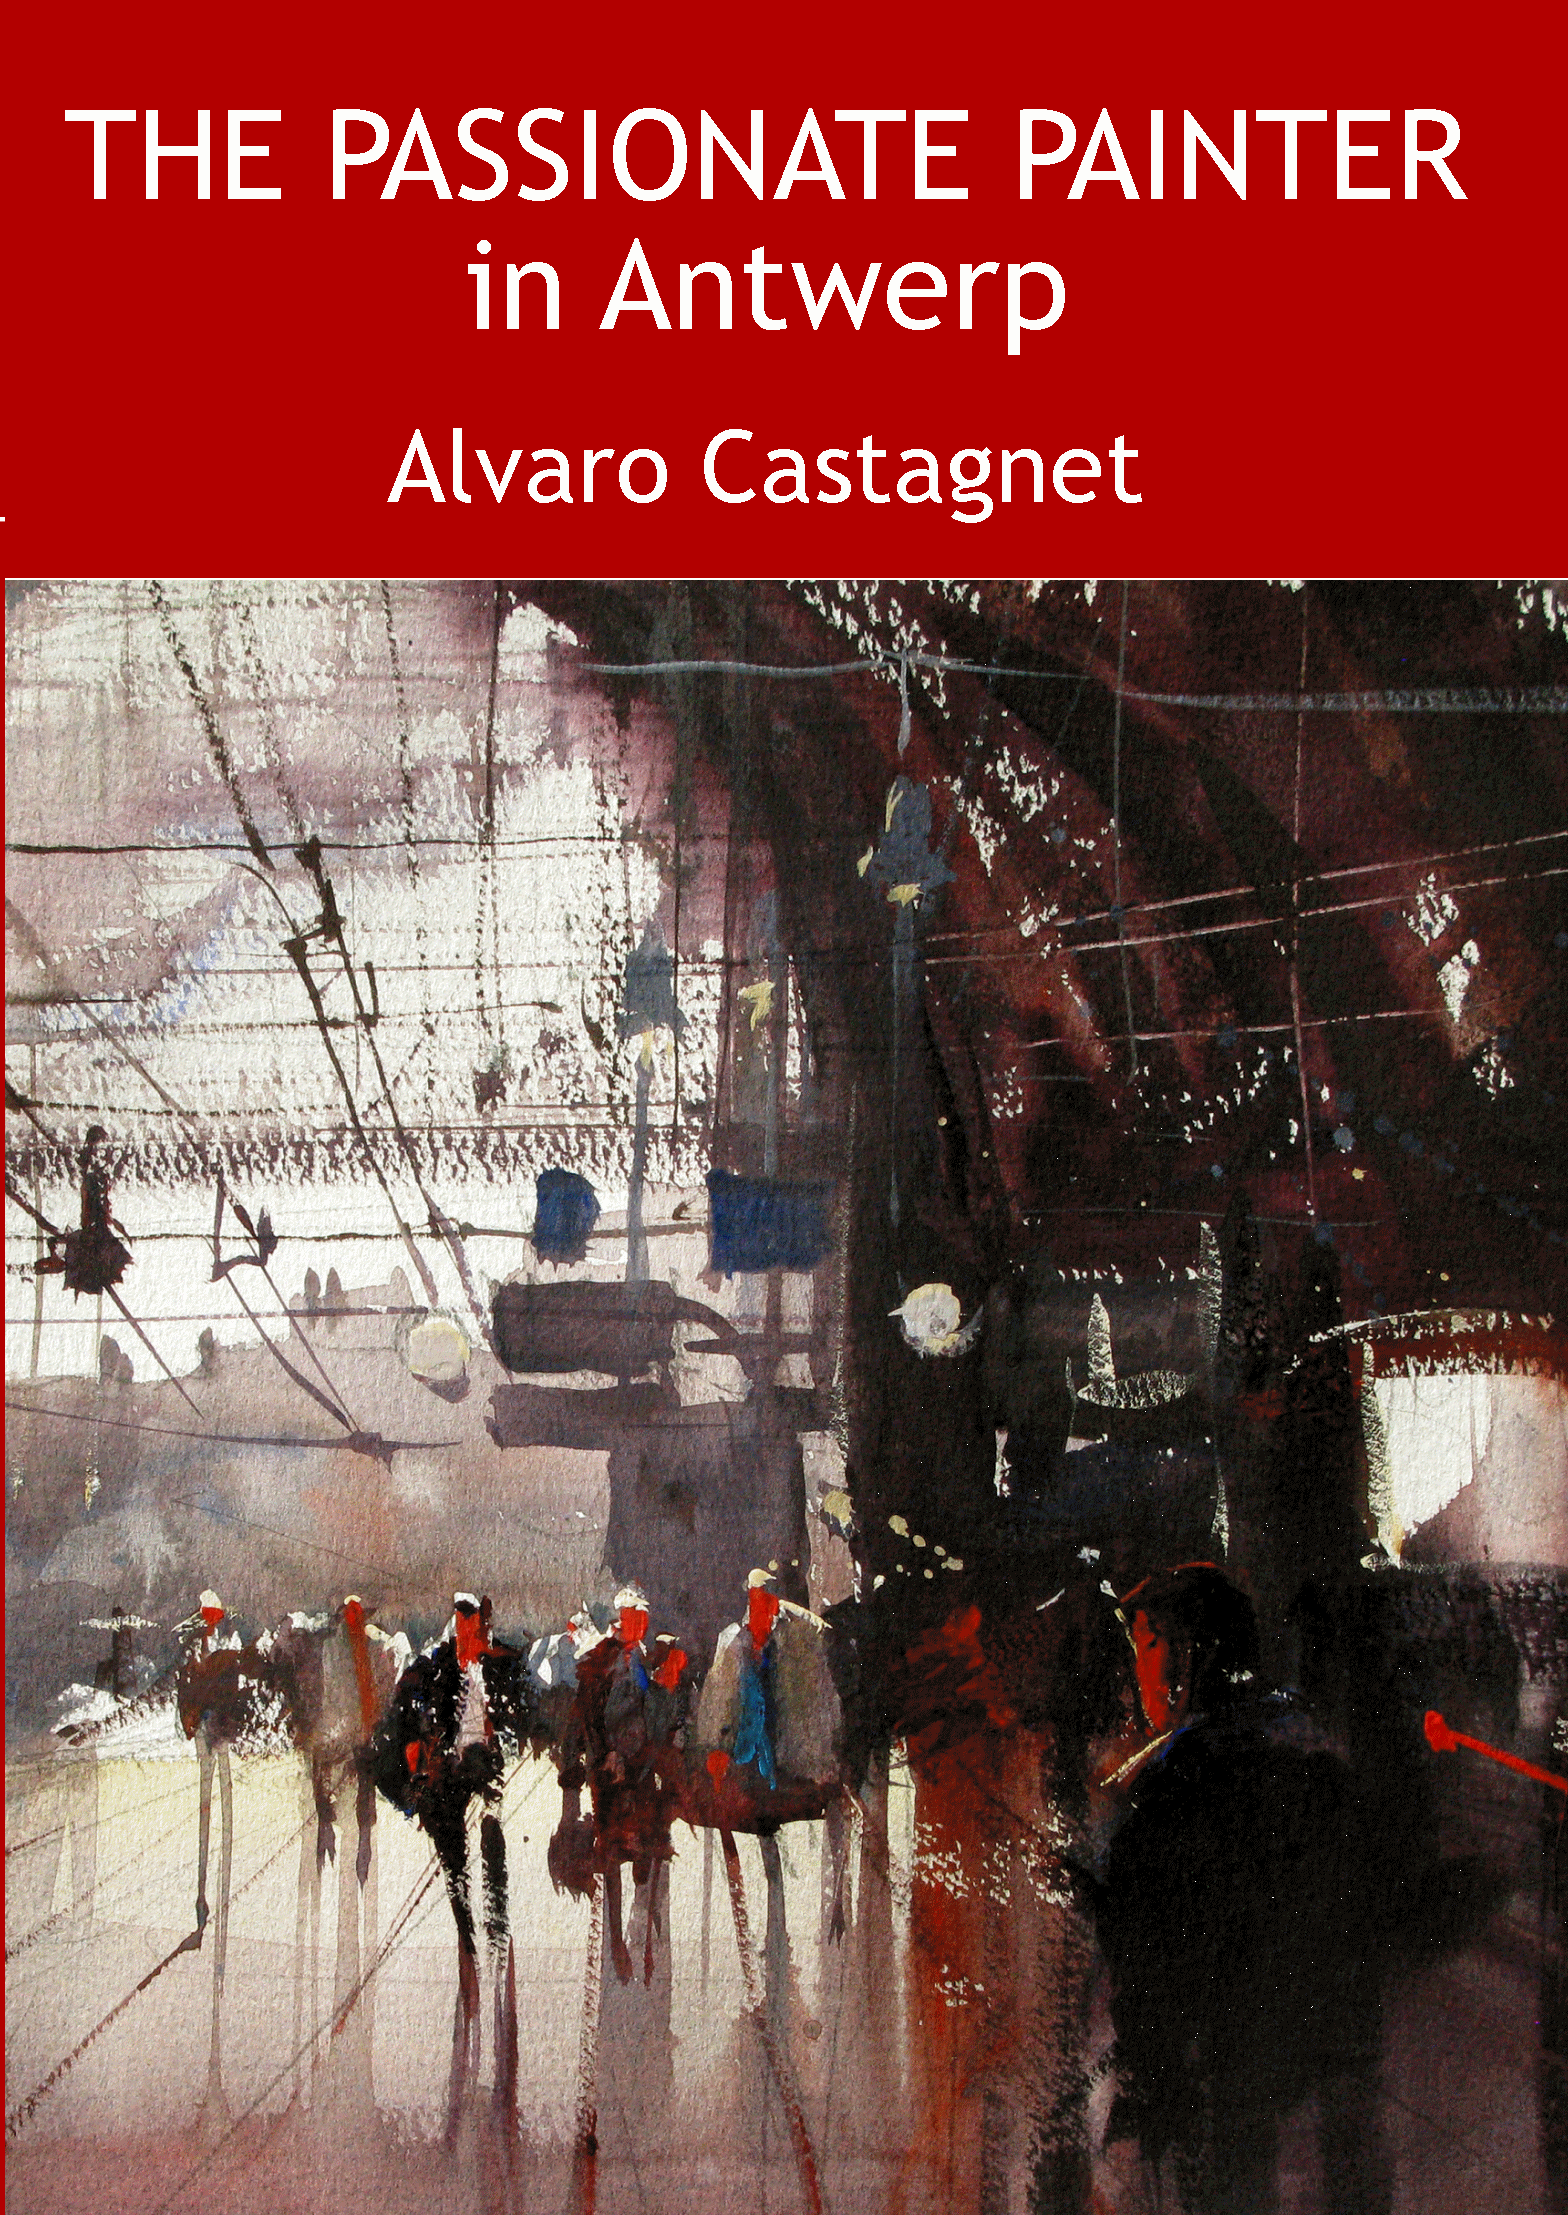 The Passionate Painter in Antwerp with Alvaro Castagnet